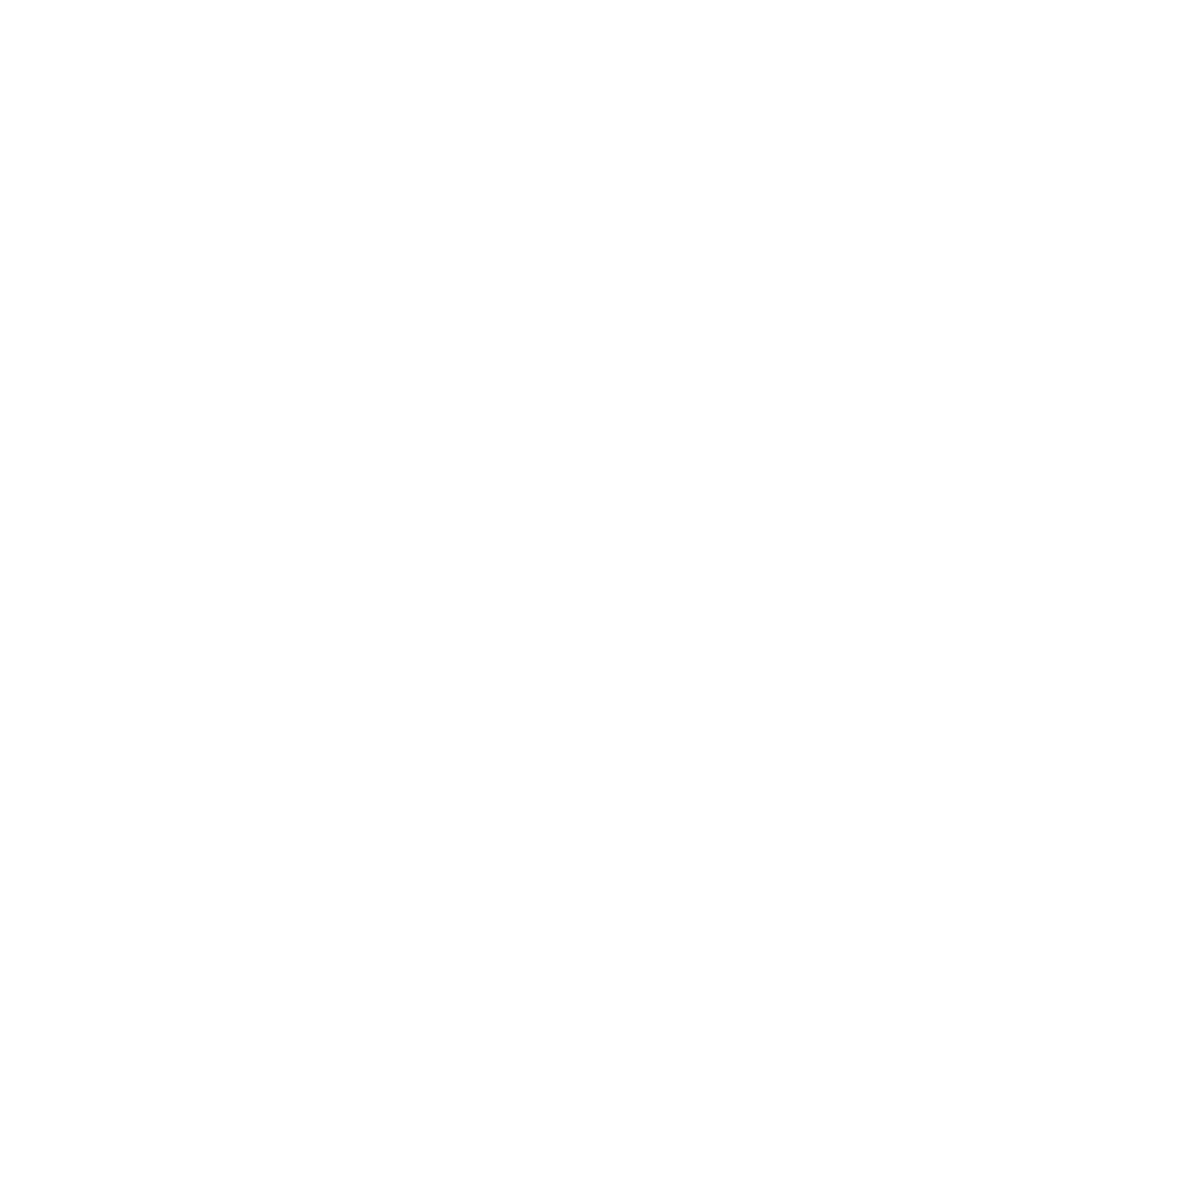 Frank Chiem